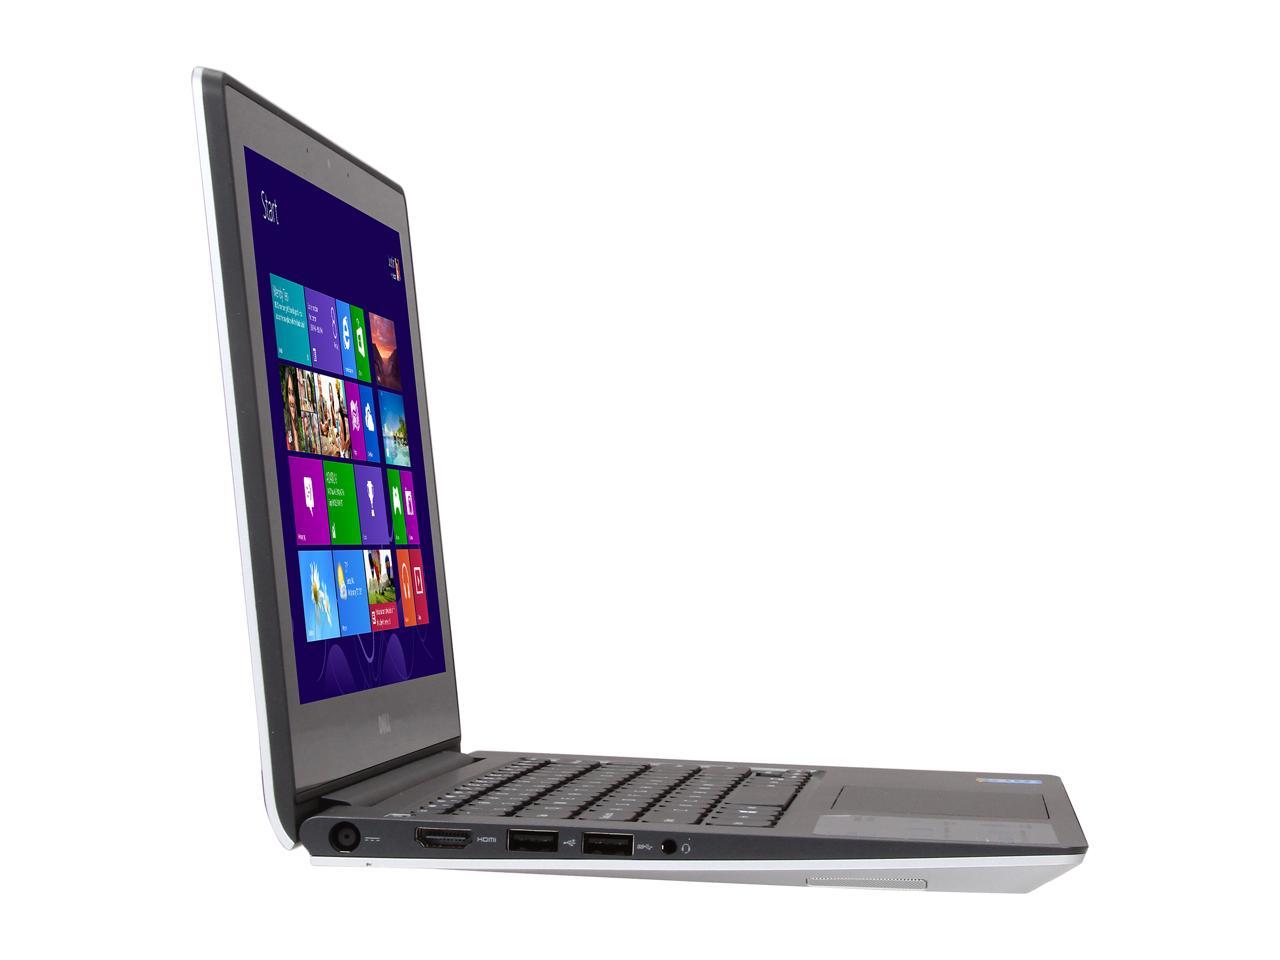 DELL Laptop Inspiron 11 (3137) i3137-5003sLV Intel Pentium 3556U (1.70 GHz) 4 GB Memory 500 GB HDD Intel HD Graphics 11.6" Touchscreen Windows 8.1